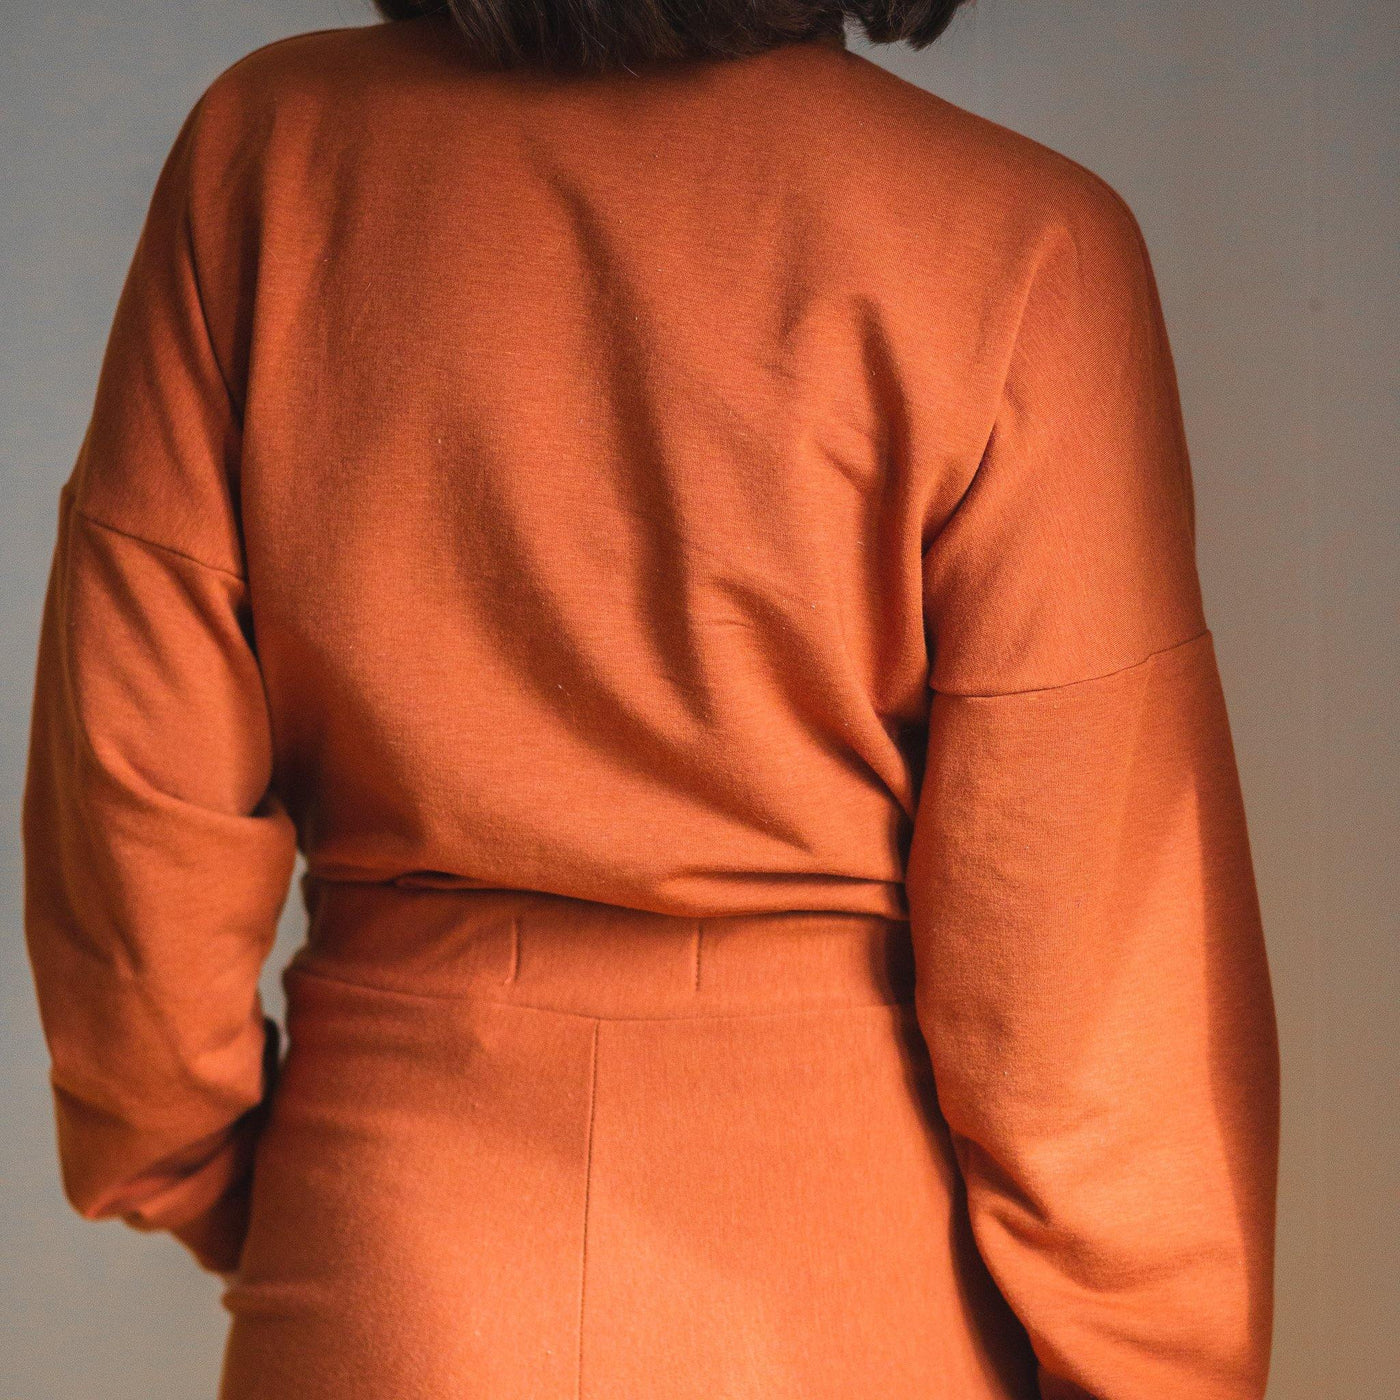 The back of a comfortable orange fleece turtle neck. Chic loungewear